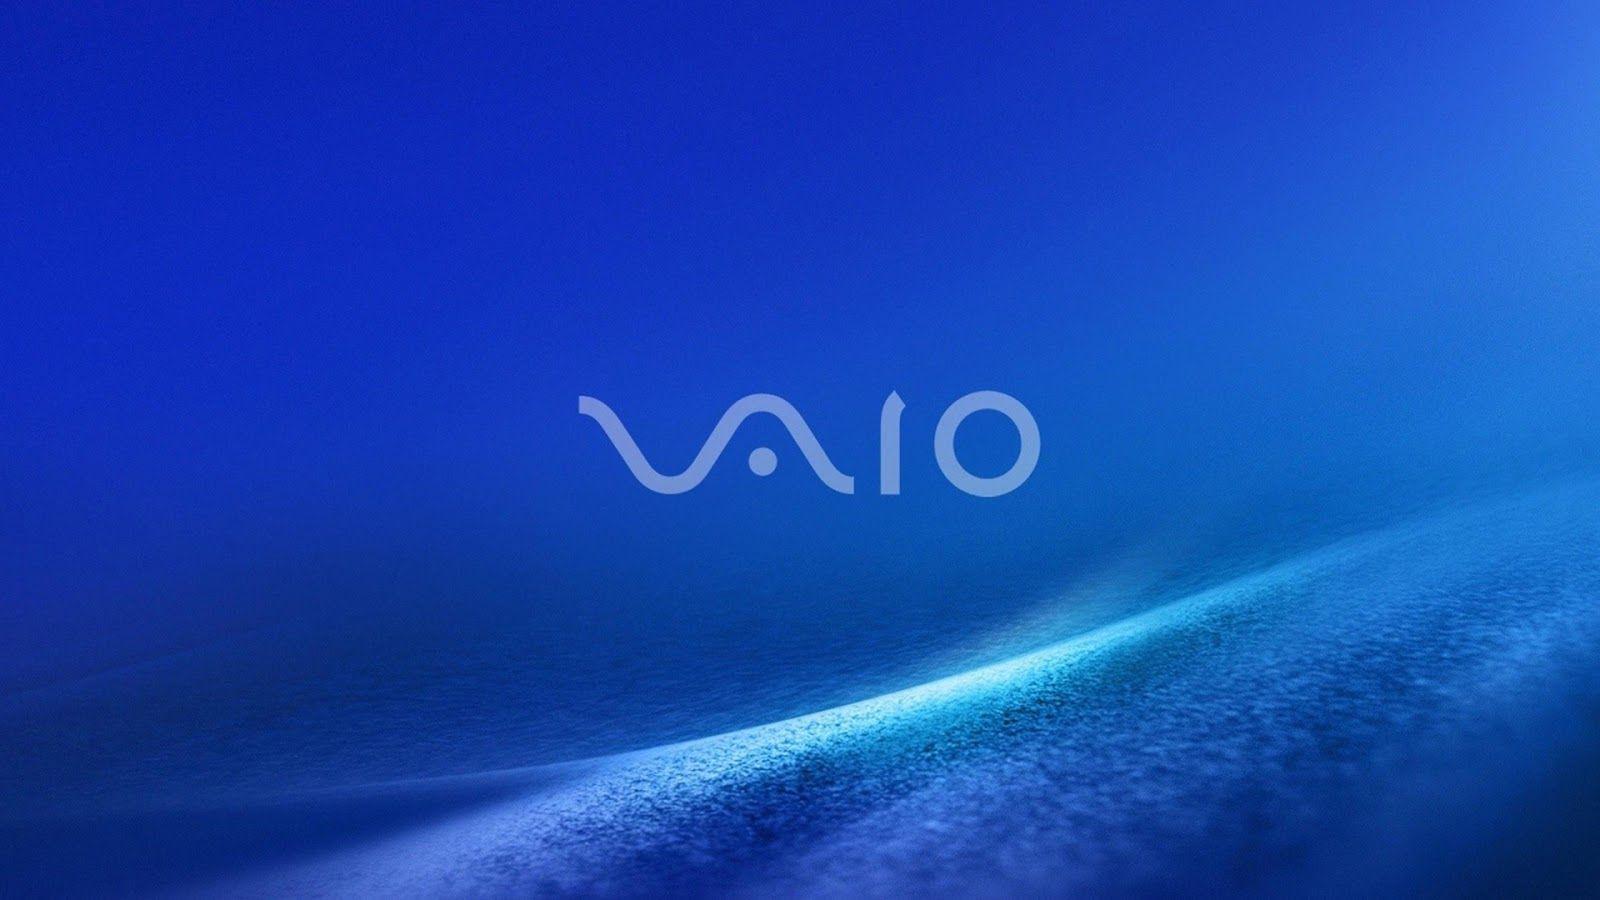 Sony Vaio HD wallpaper